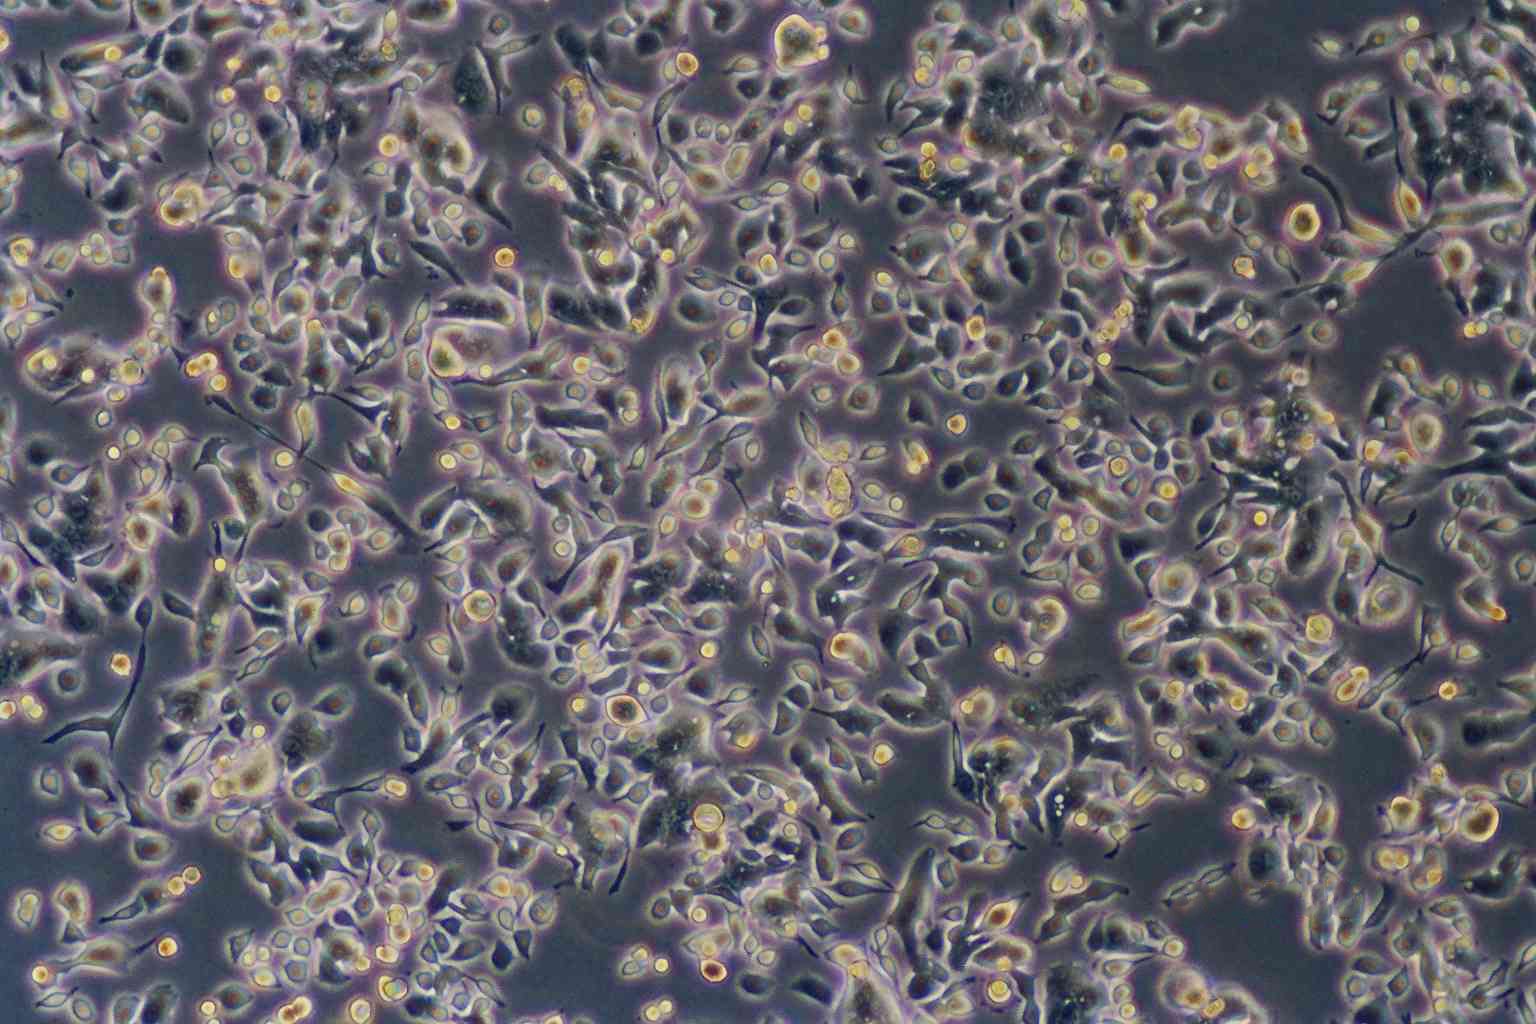 V79-4 epithelioid cells中国仓鼠肺细胞系